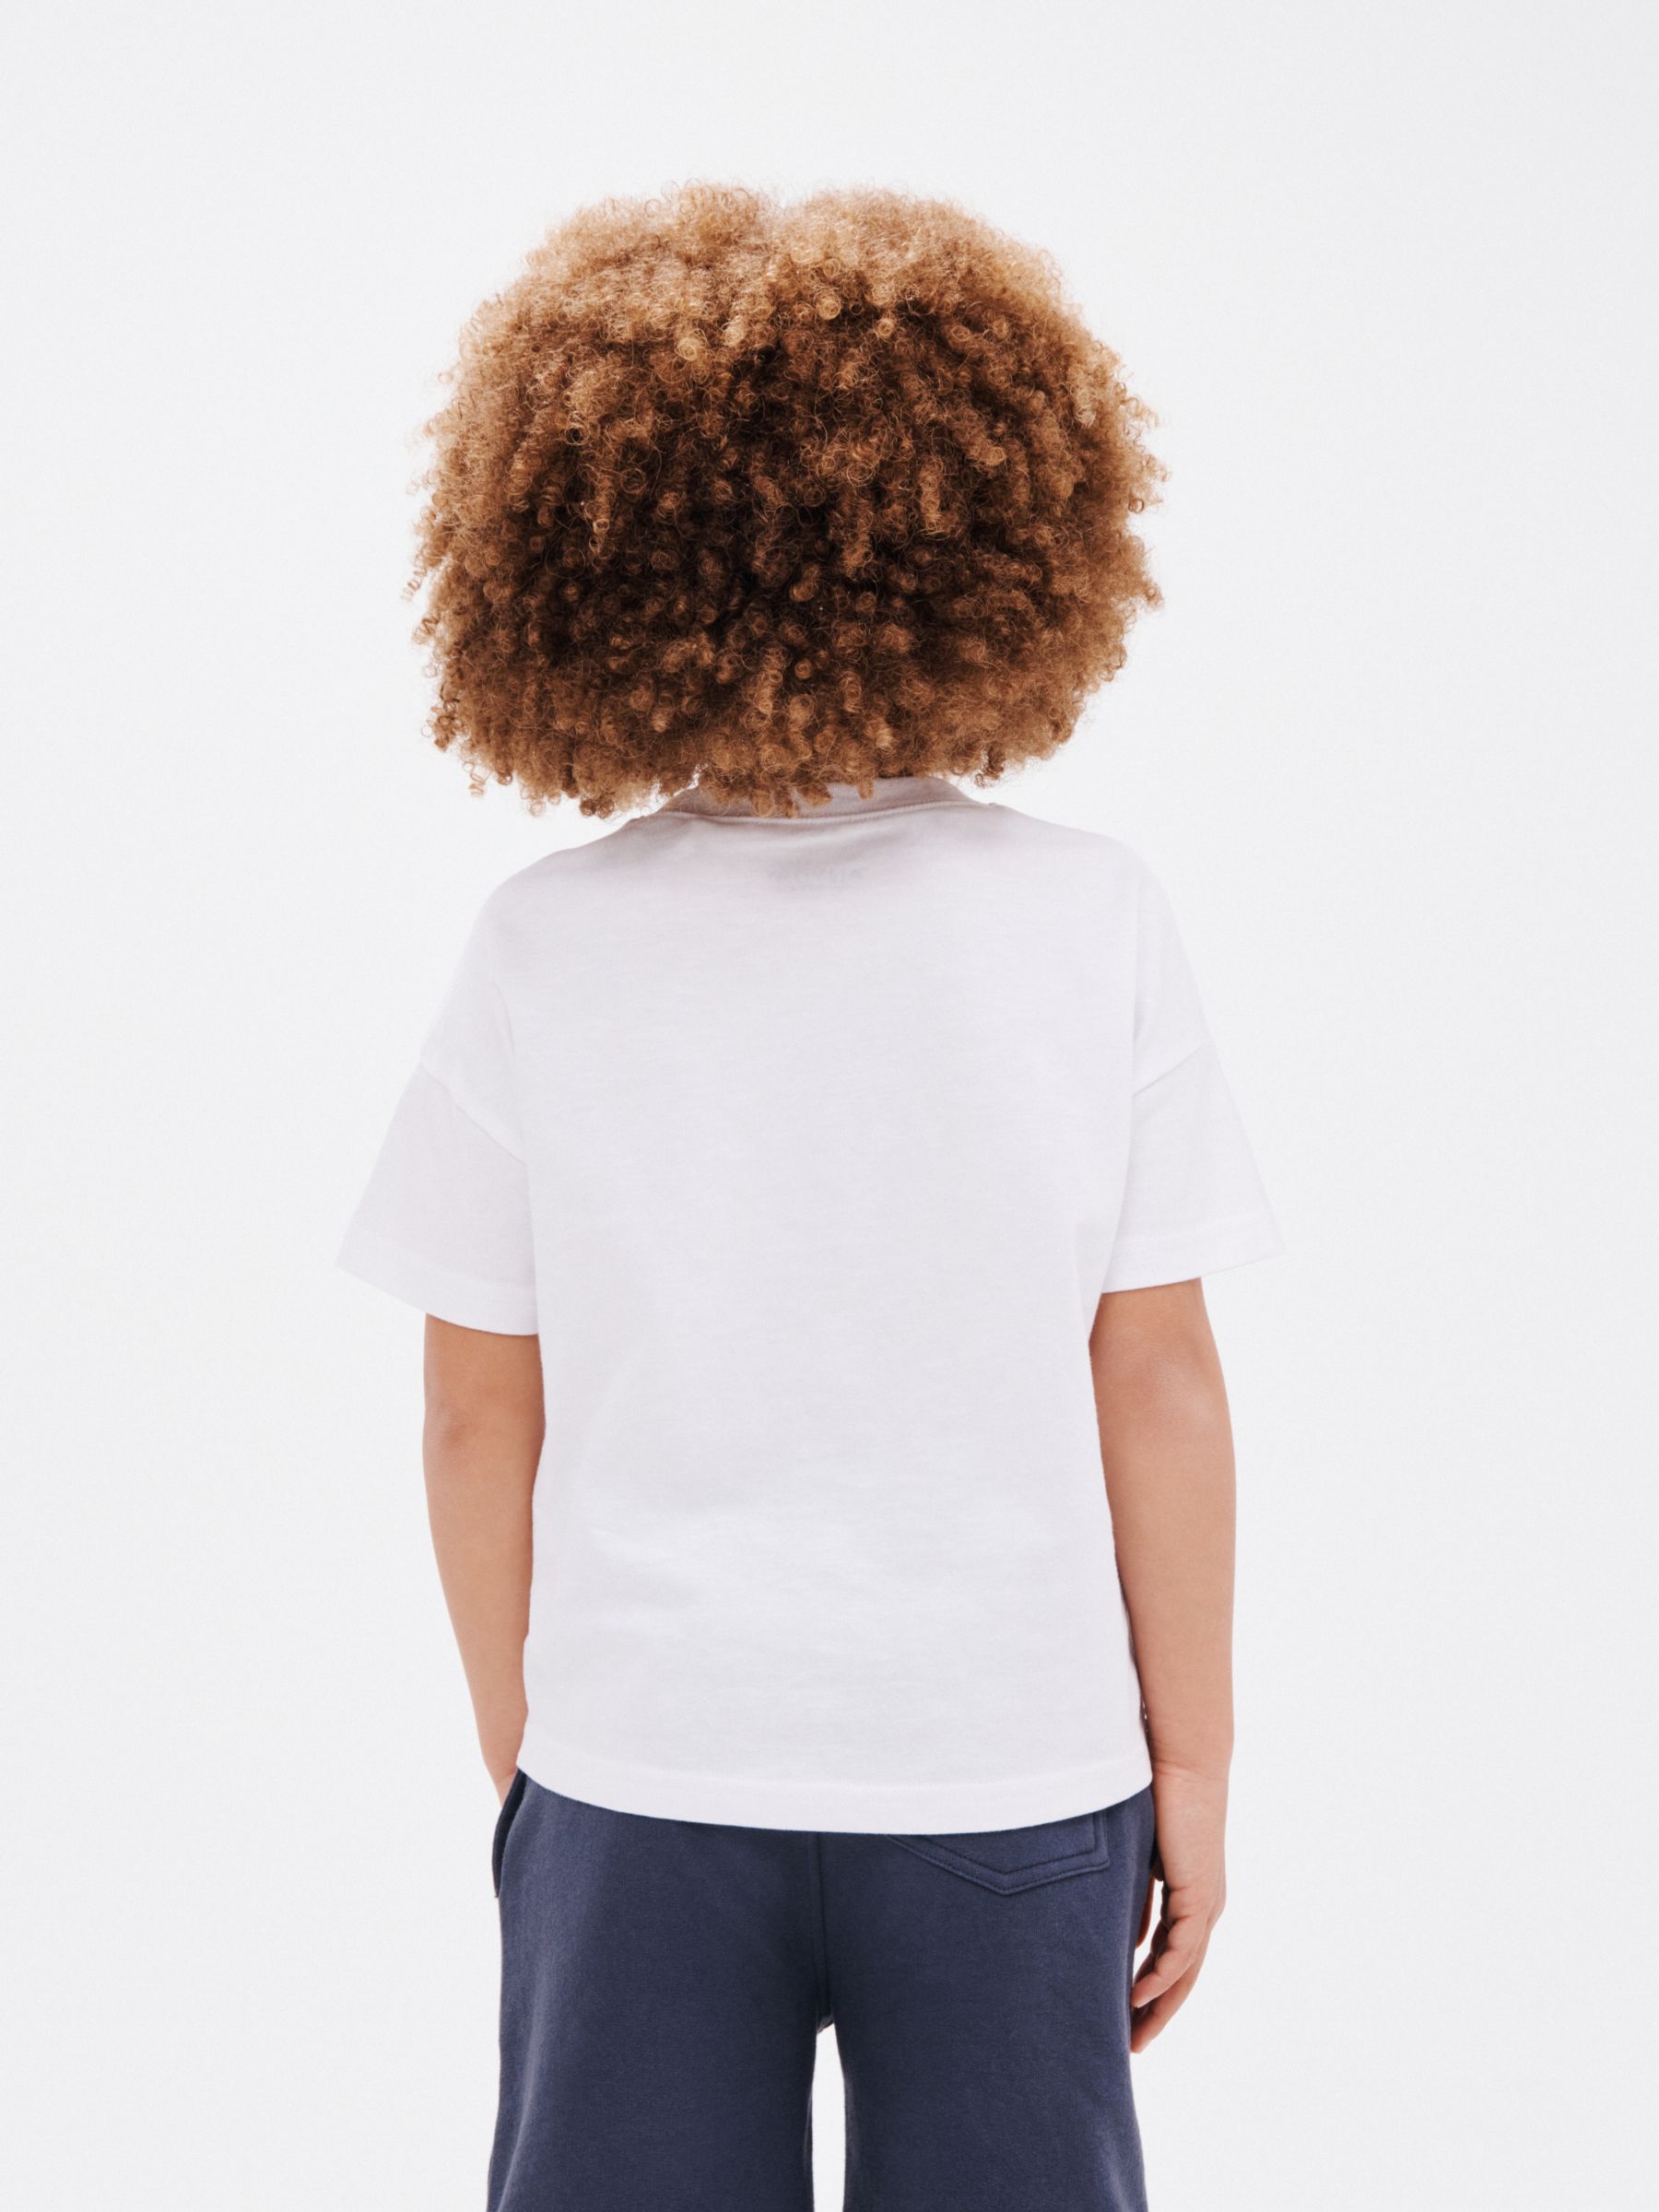 Buy John Lewis ANYDAY Kids' Plain Cotton Short Sleeve T-Shirt Online at johnlewis.com